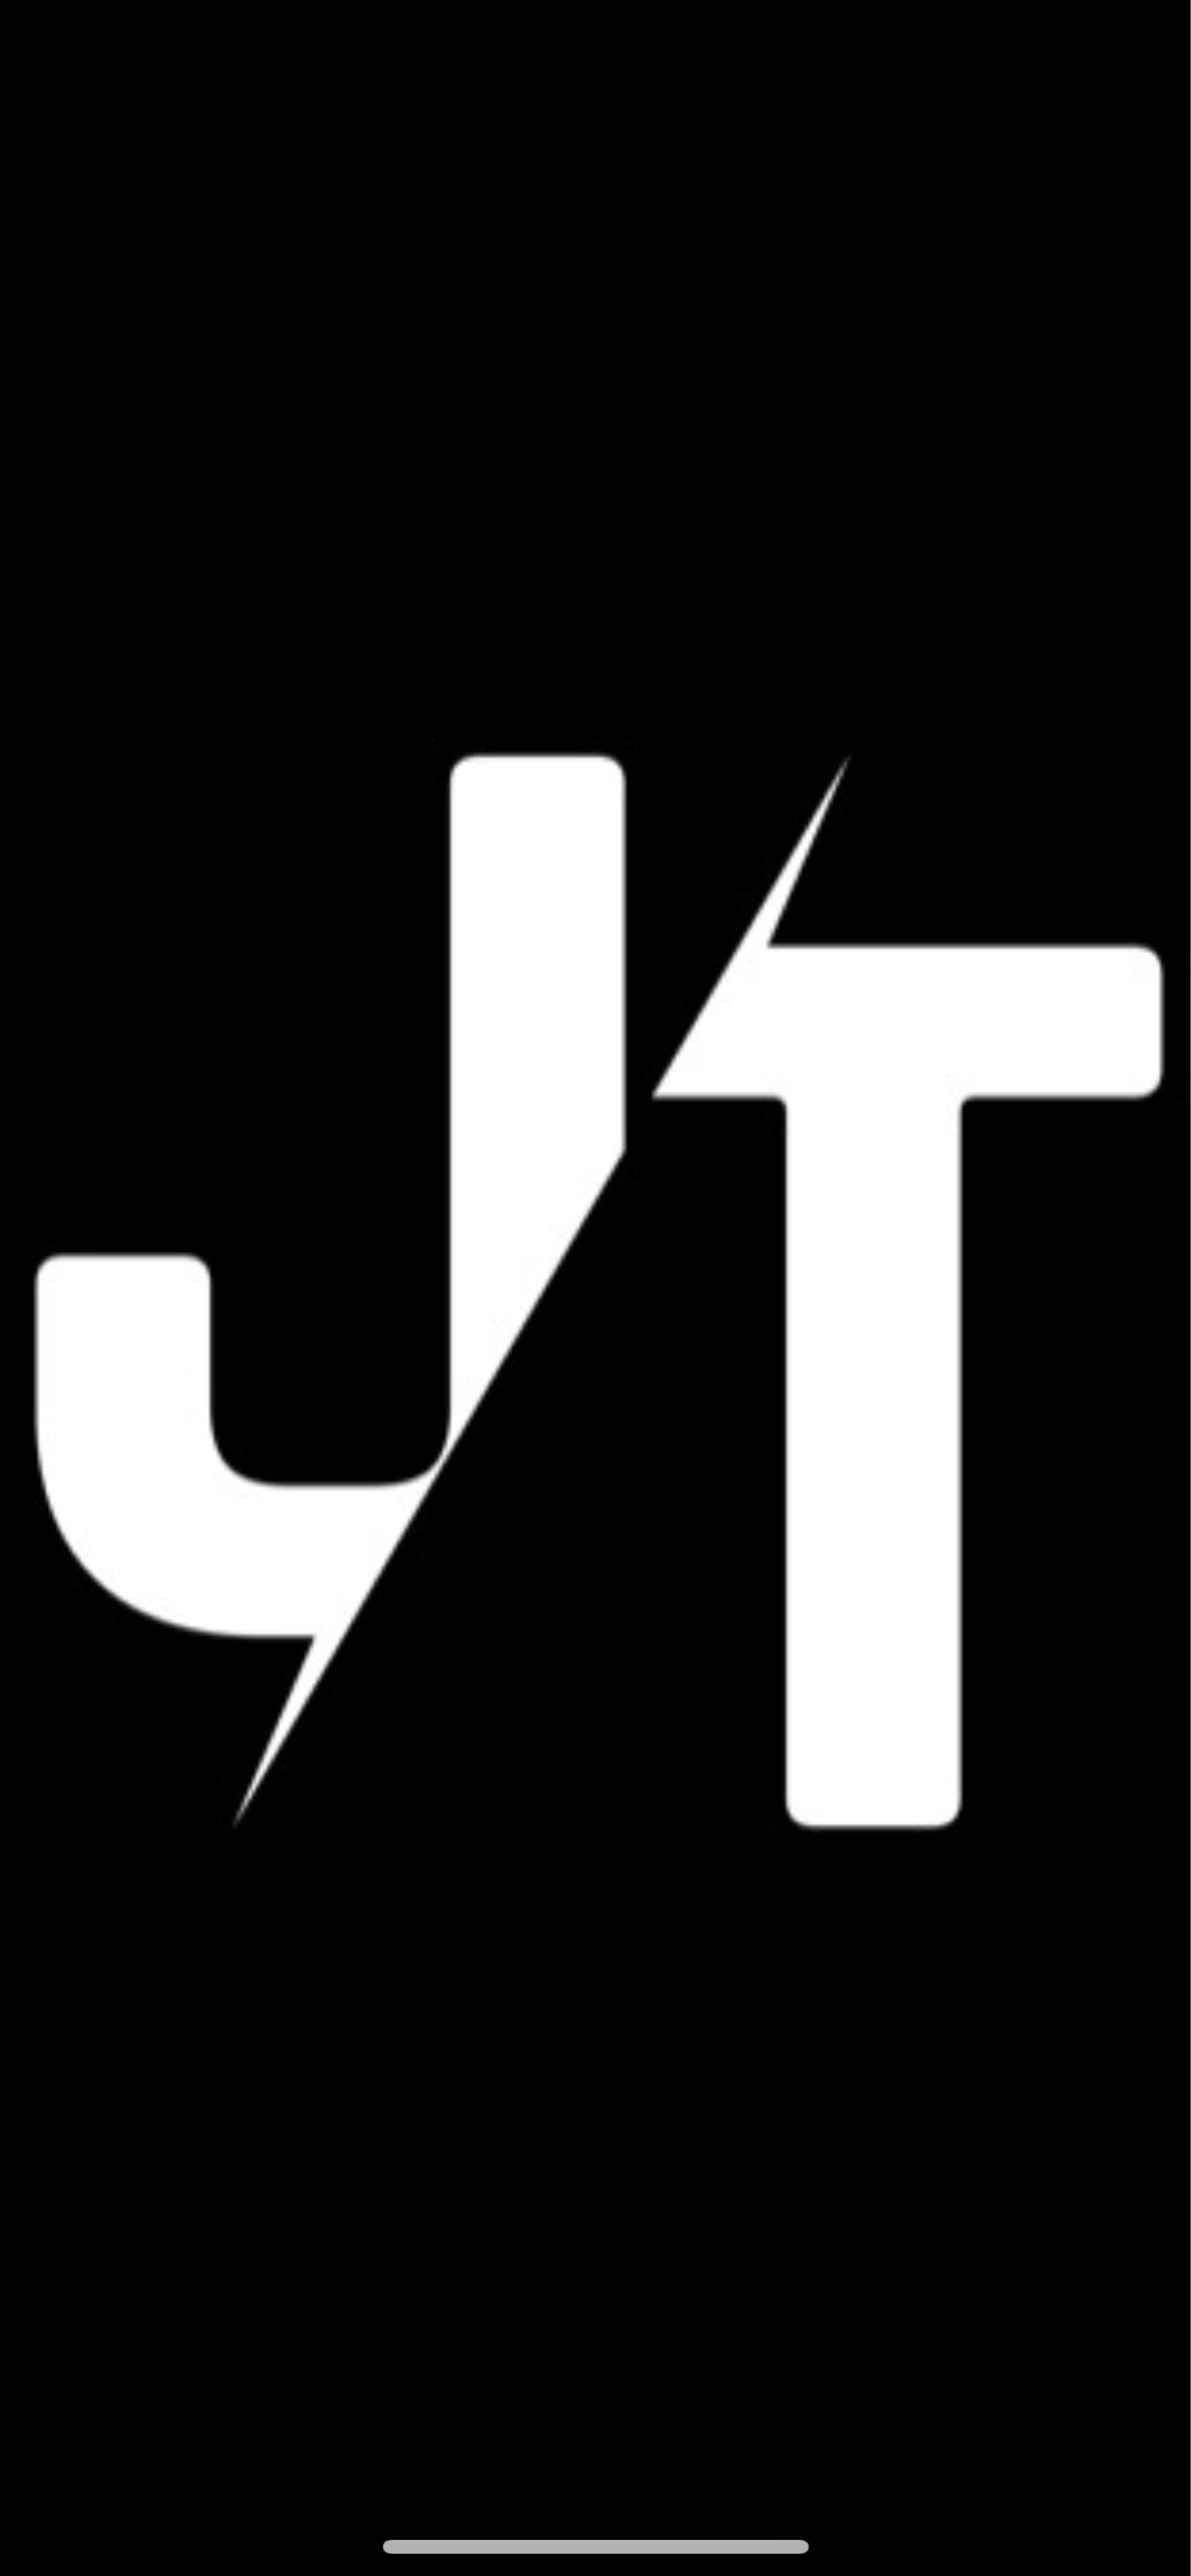 JT Landscape Maintenance Logo